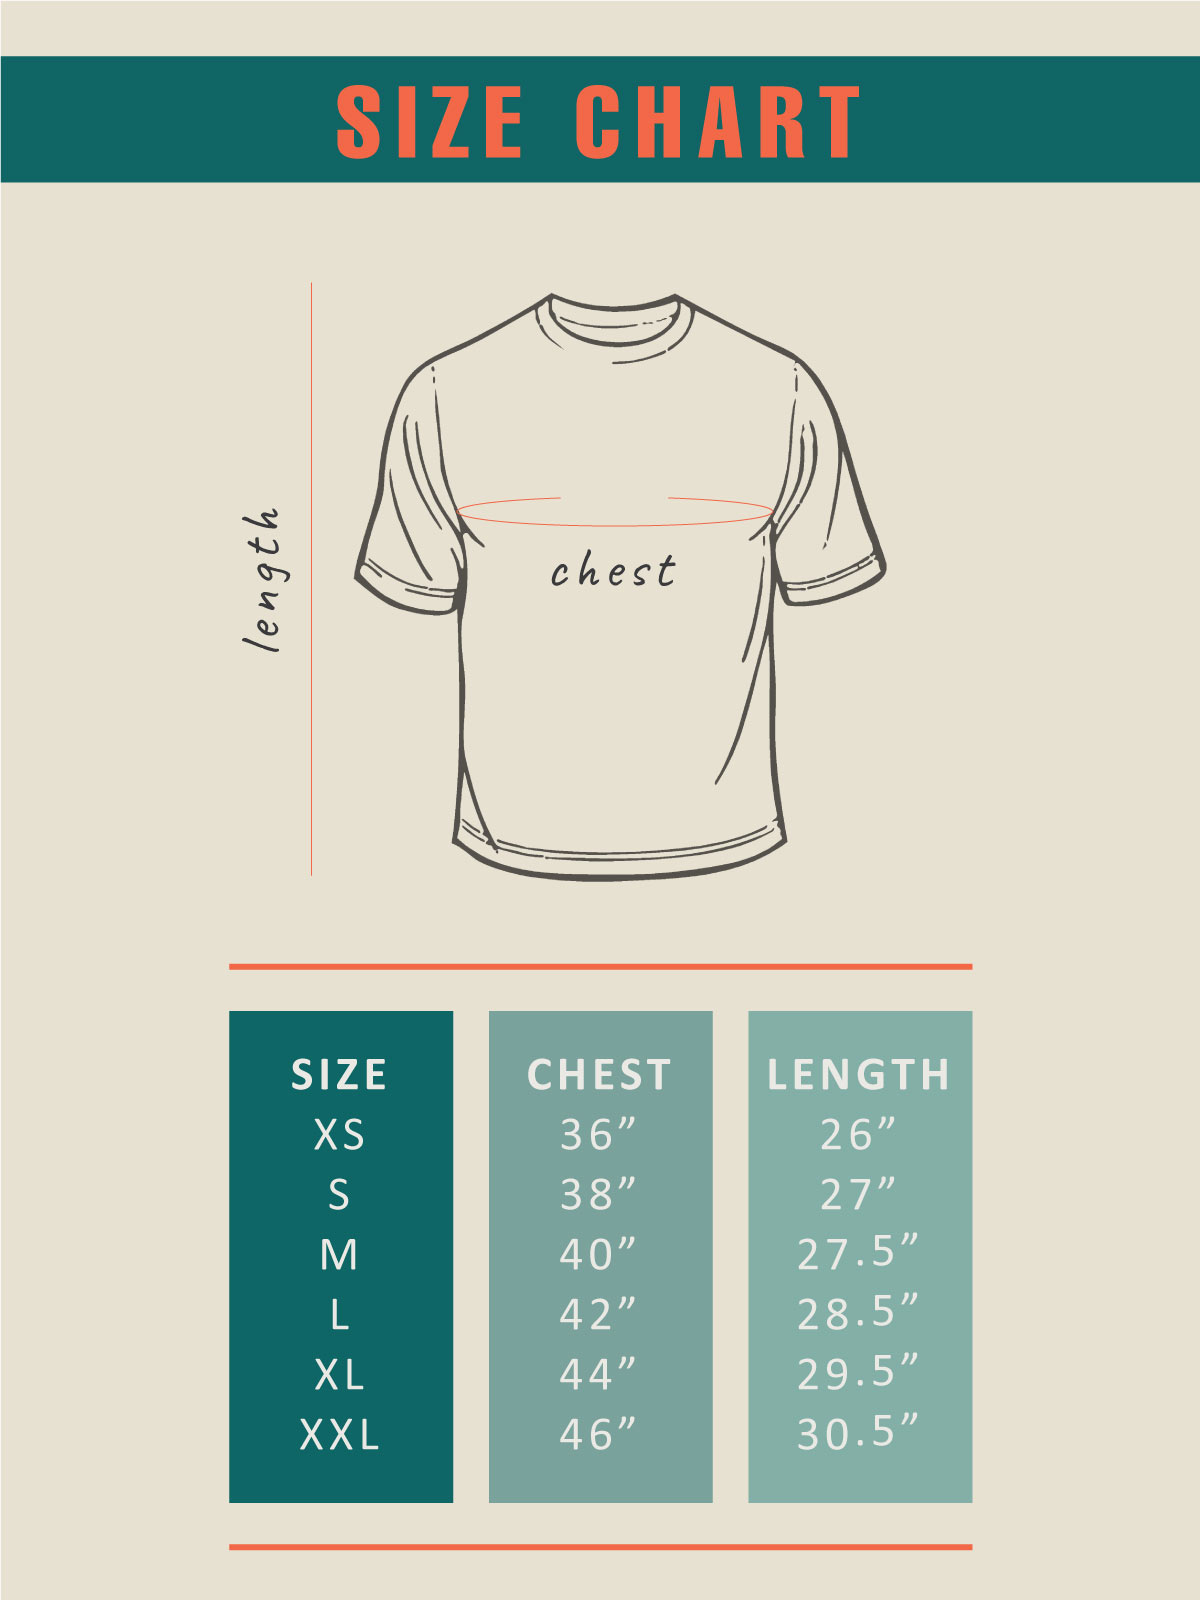 Unisex printed Tshirts size chart by Shopghumakkad